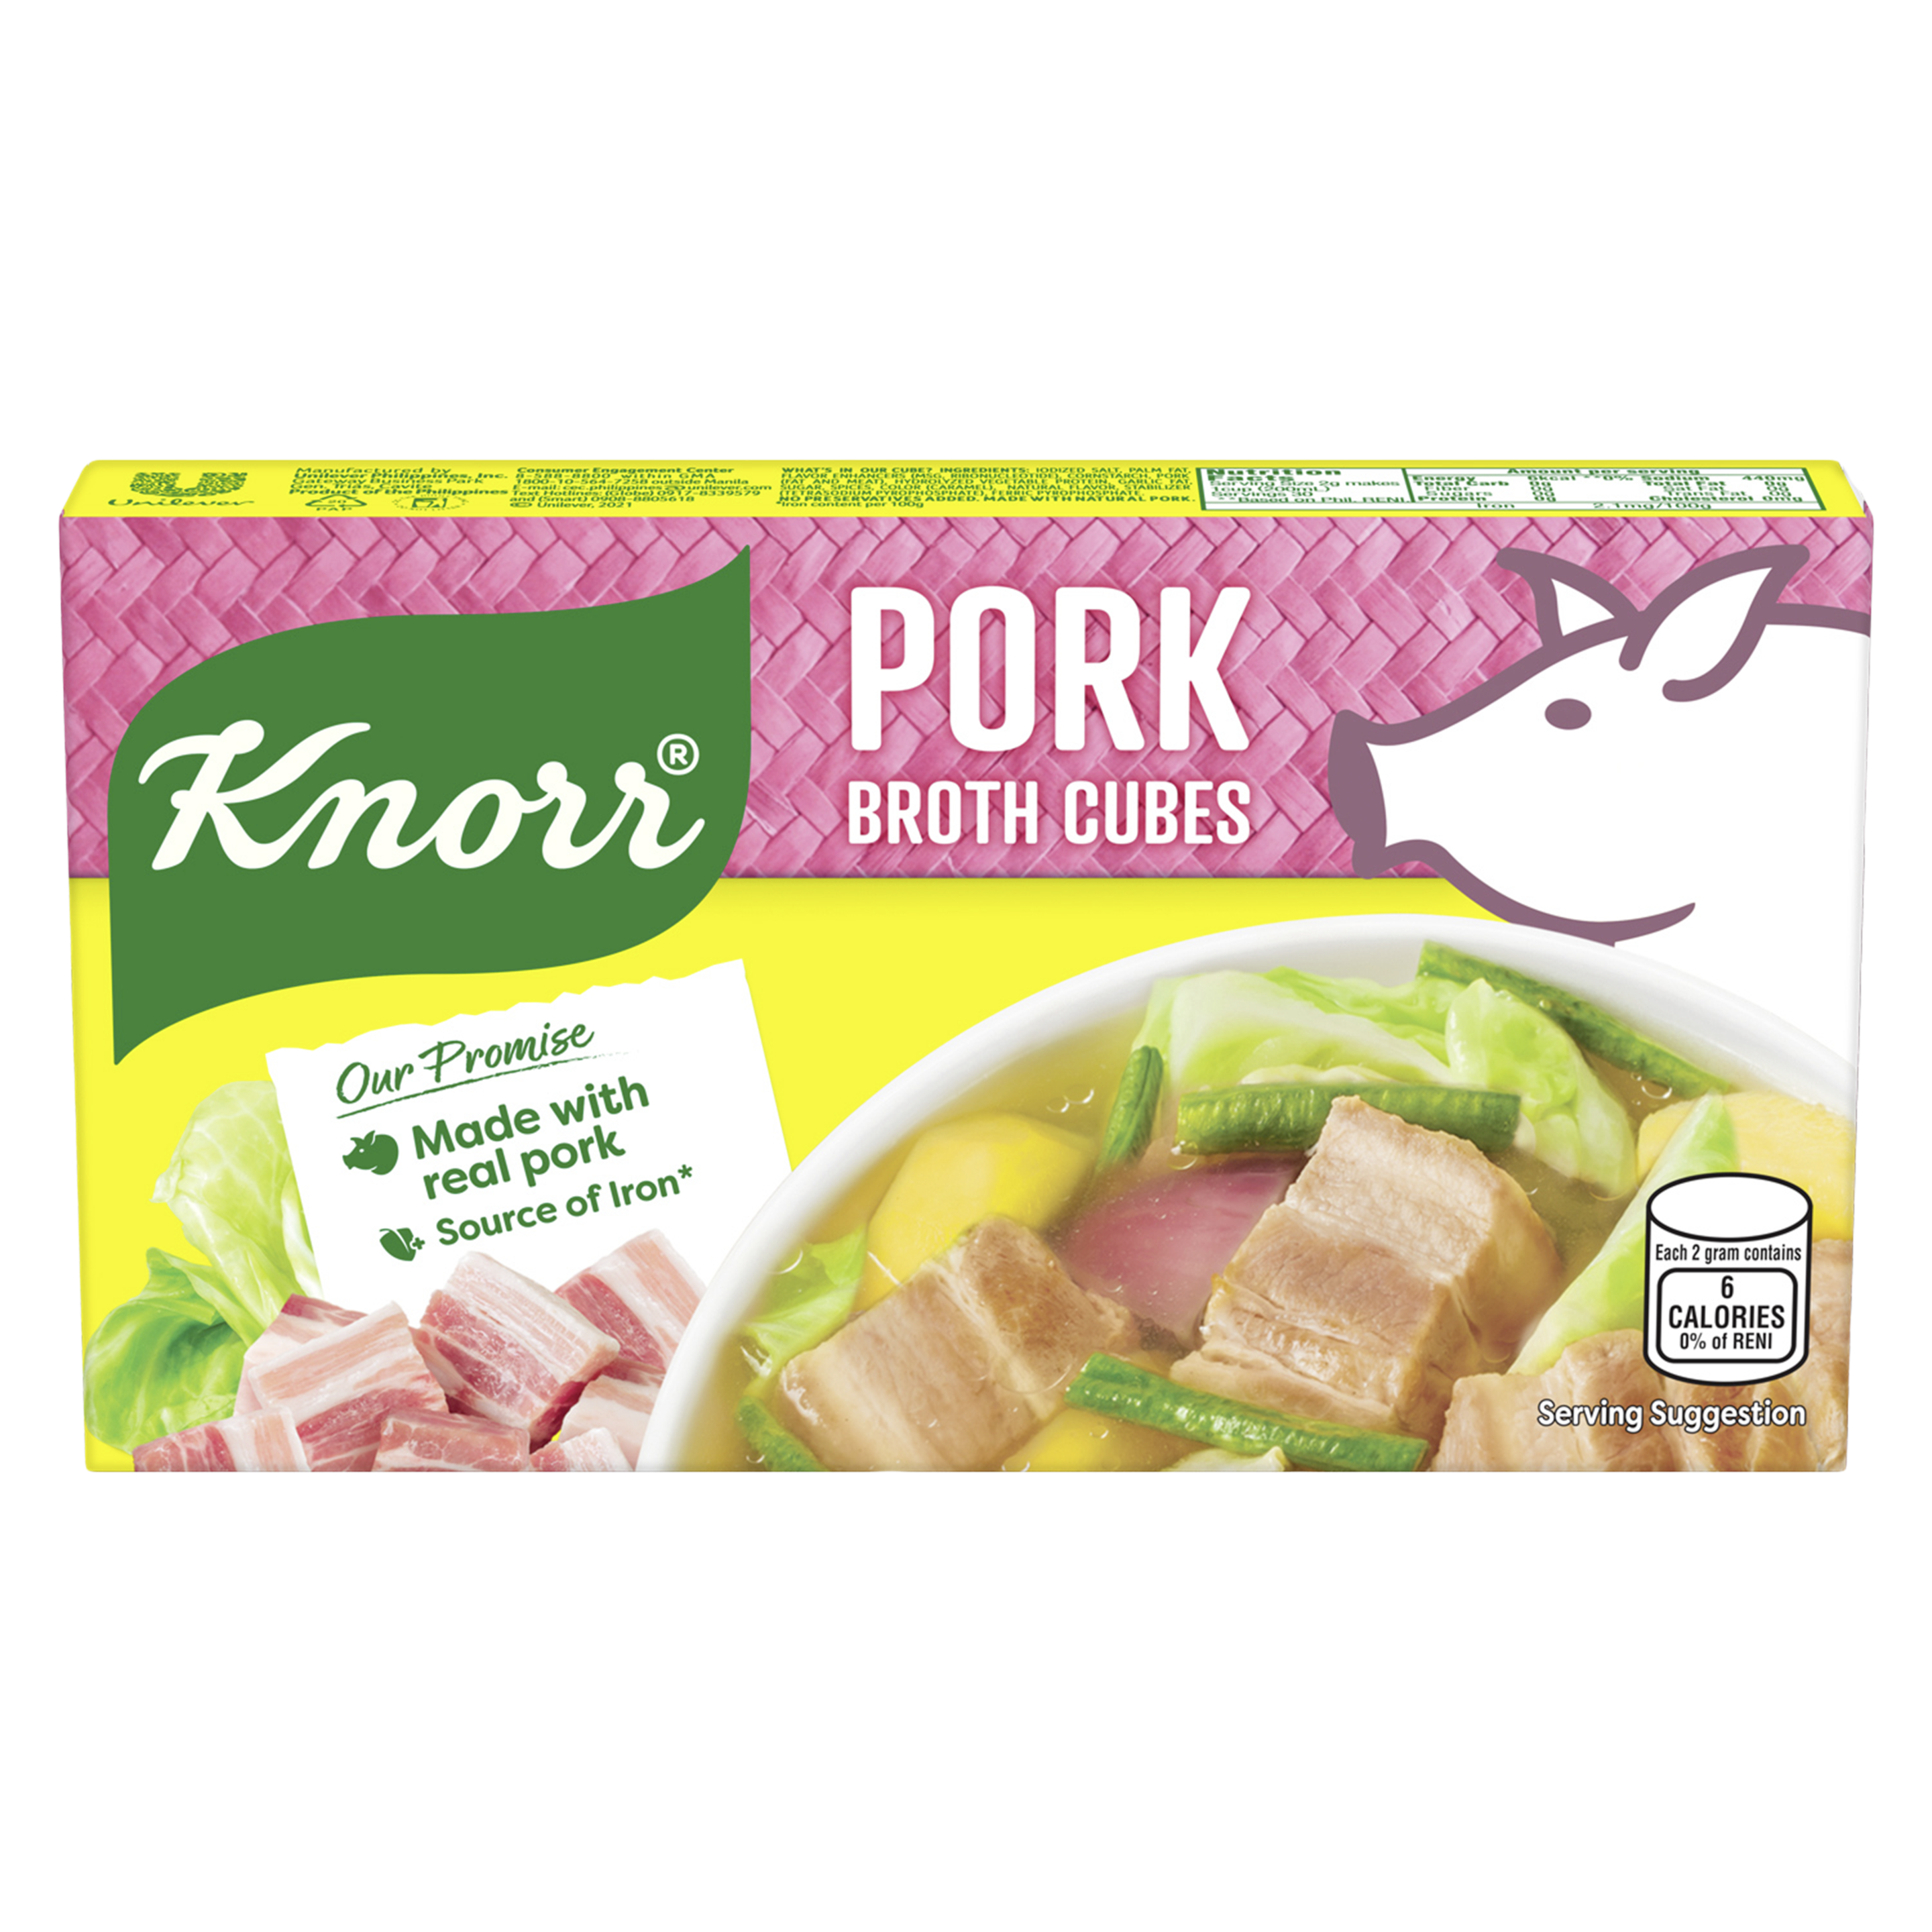 A box of Knorr Pork Broth Cubes